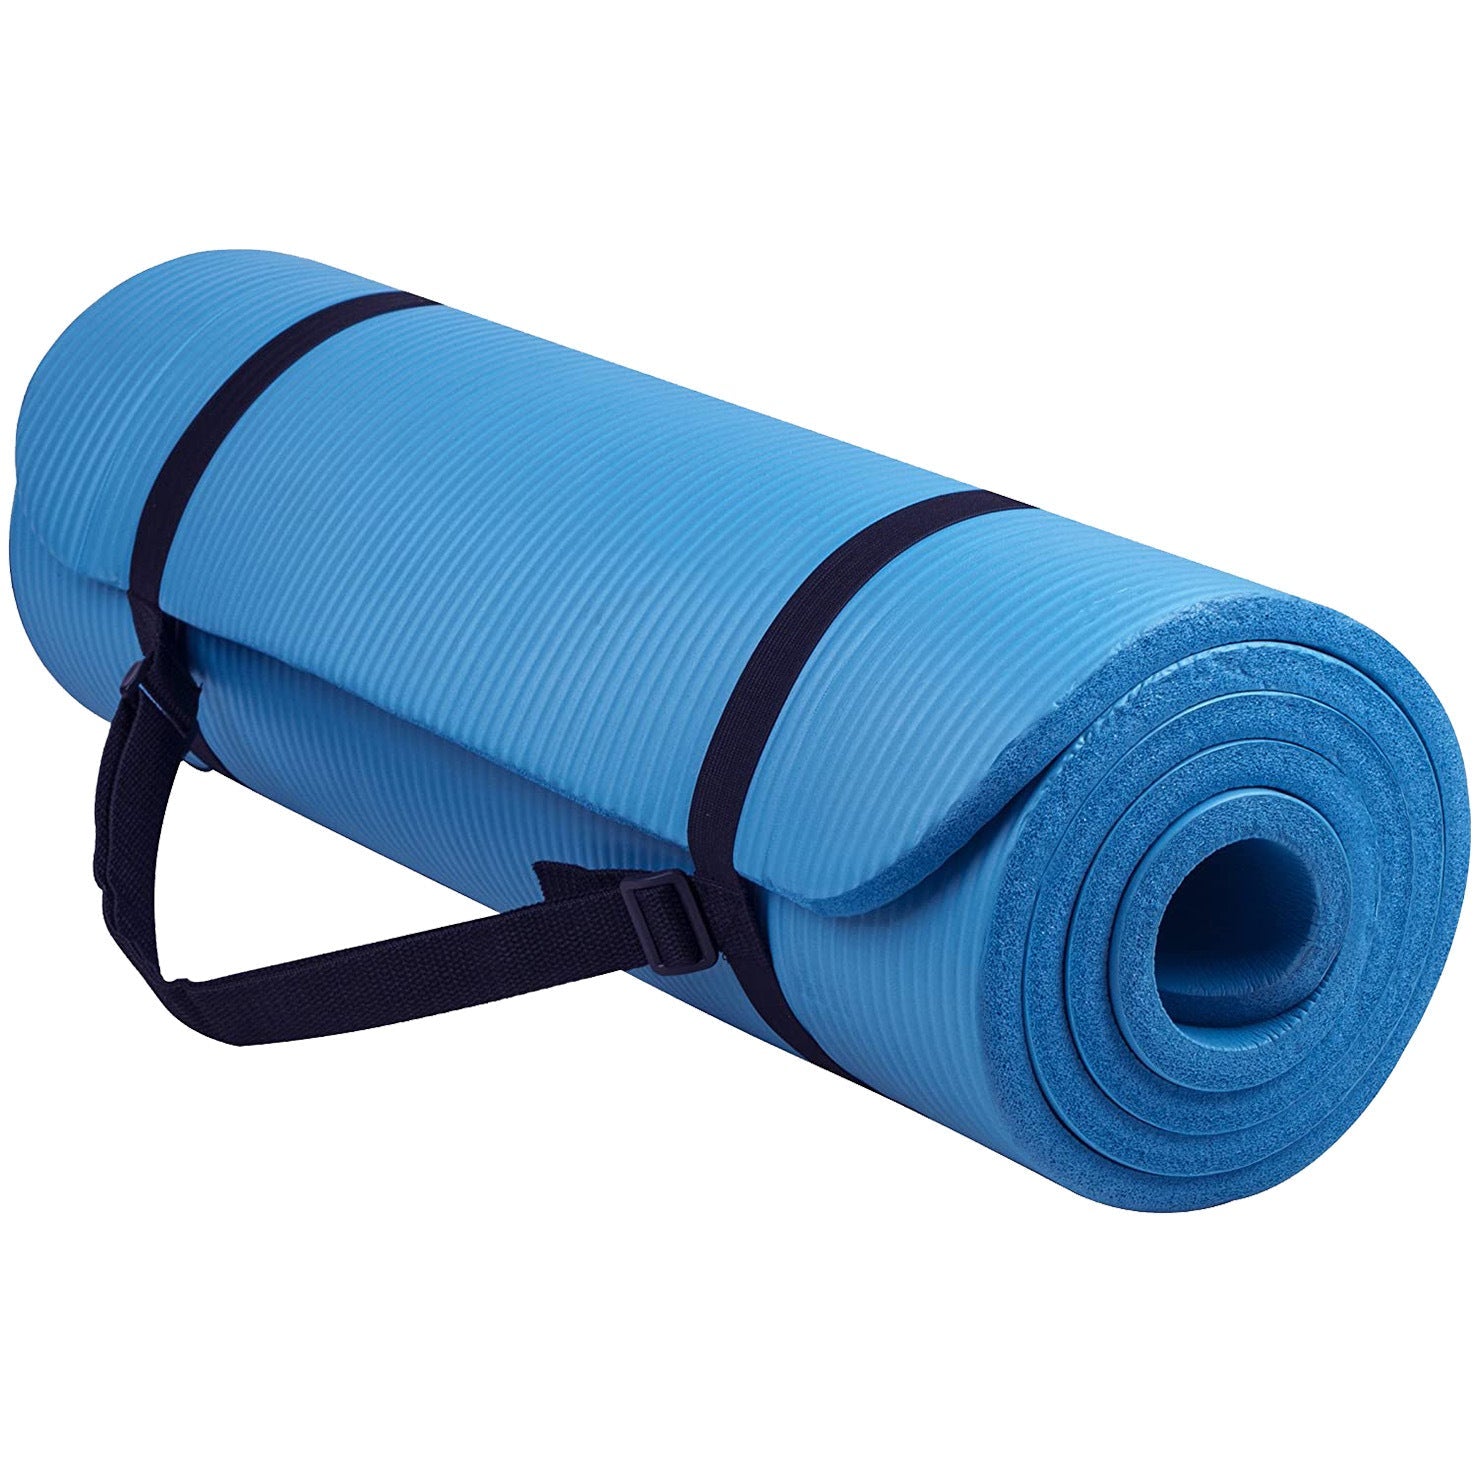 Yoga Mat Striped - Stregactive